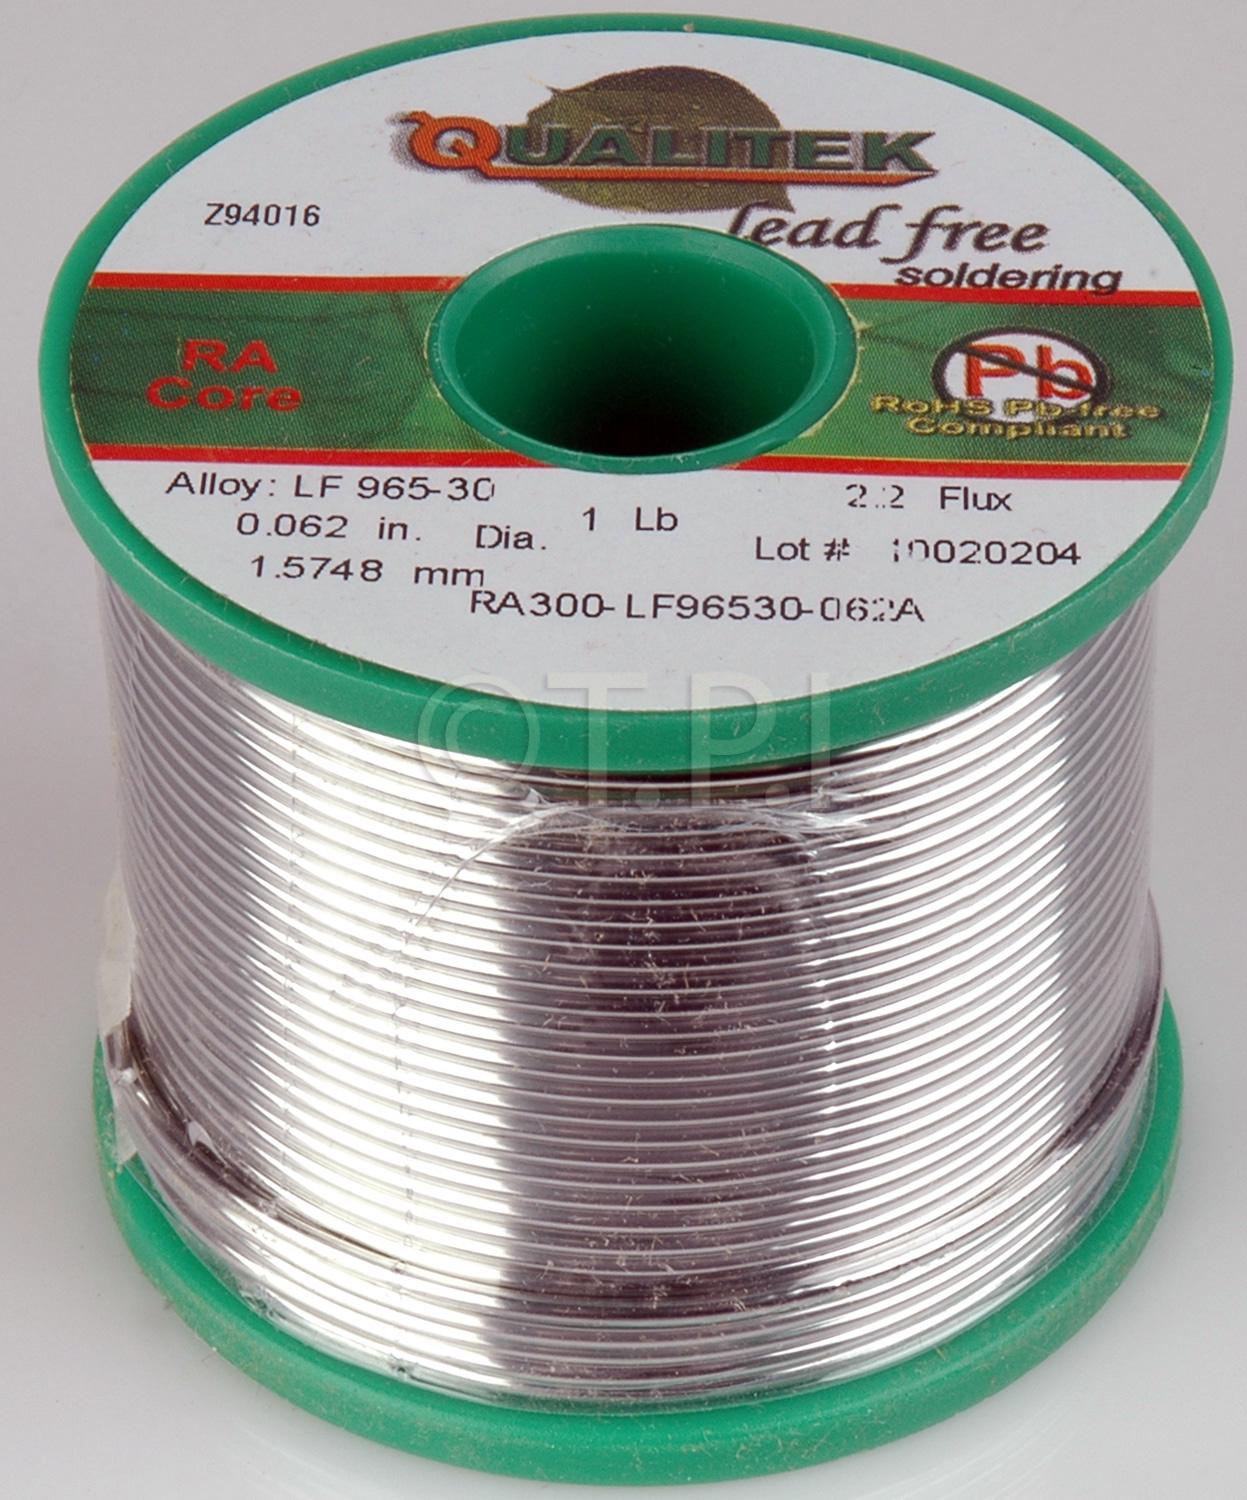 Rosin core Solder SAC-16wga 3%silver Lead free .061 Z94016